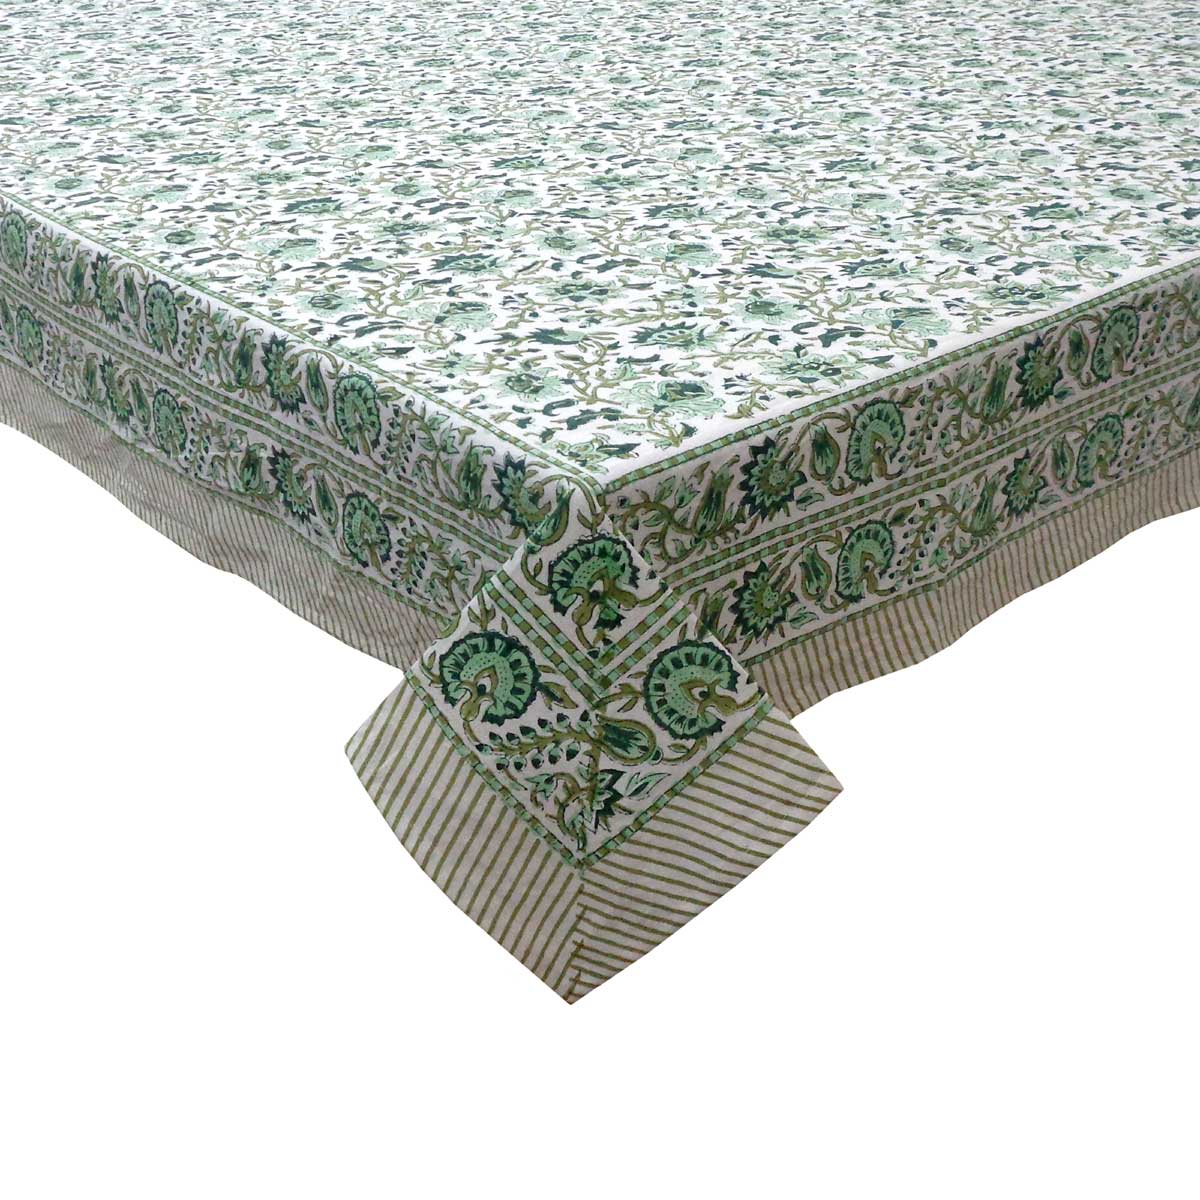 Indian Block Print Tablecloth 150x220cm (4-6 seater)